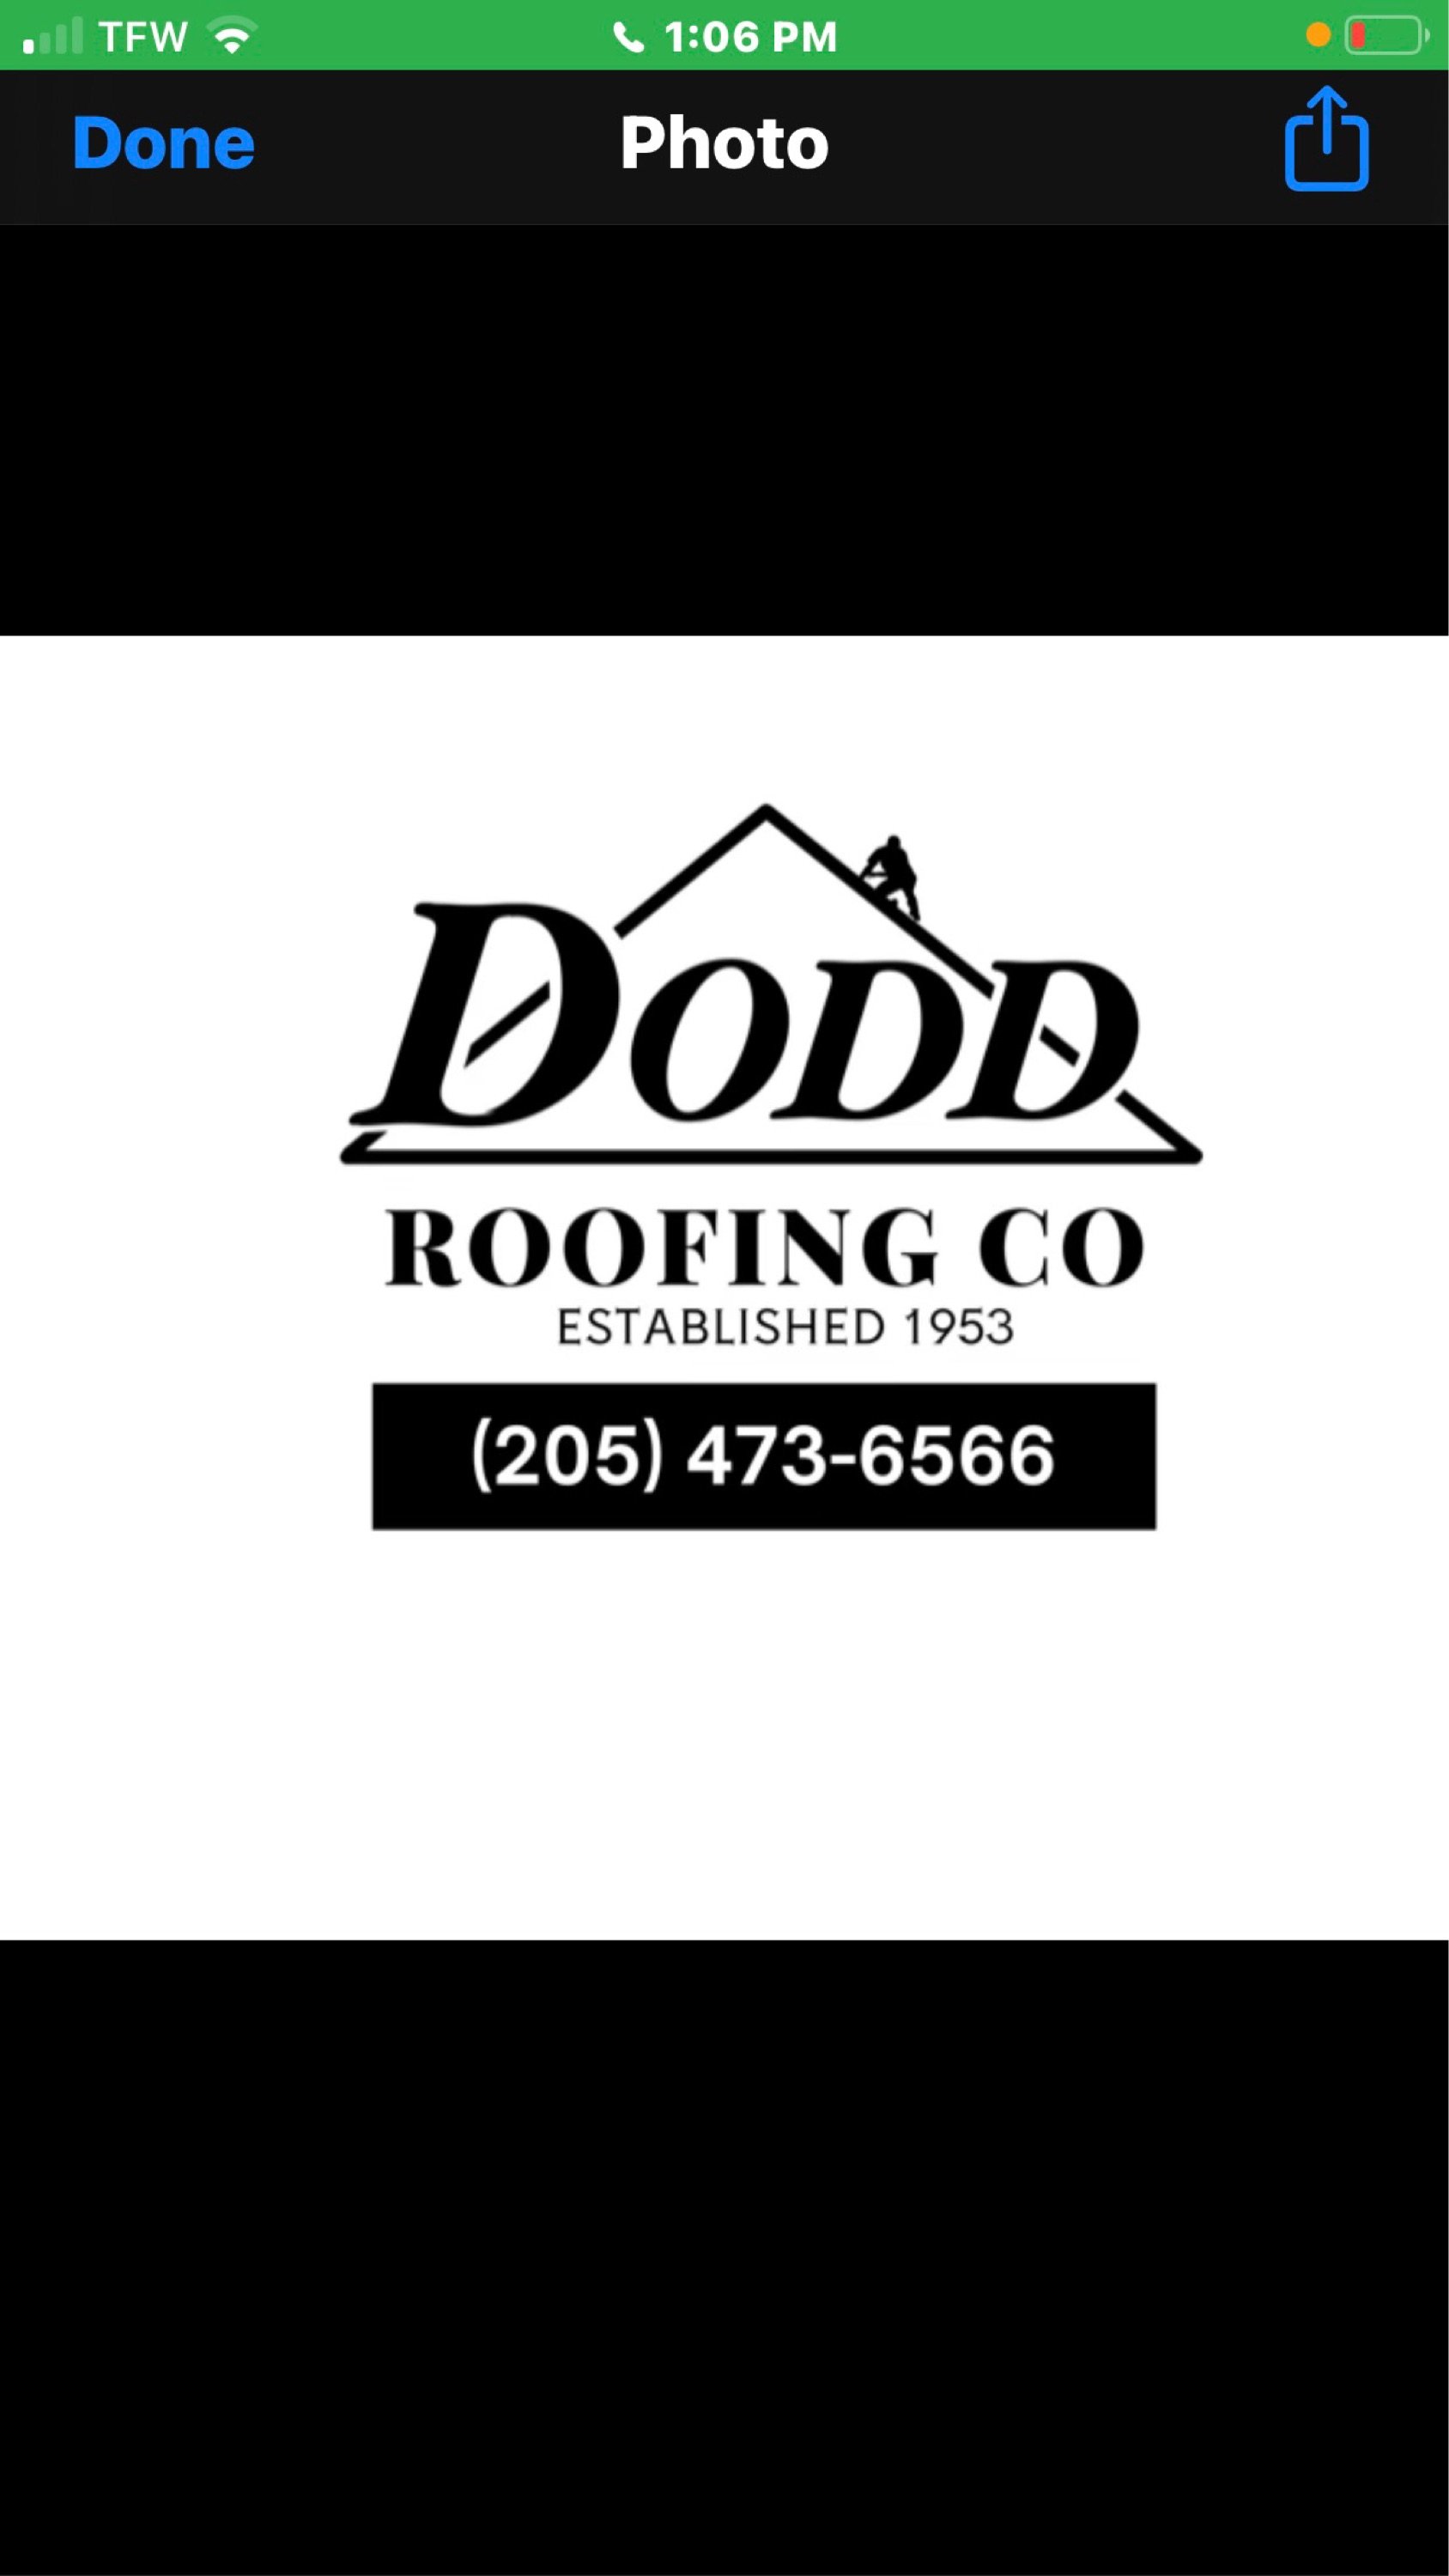 Dodd Roofing Company Logo